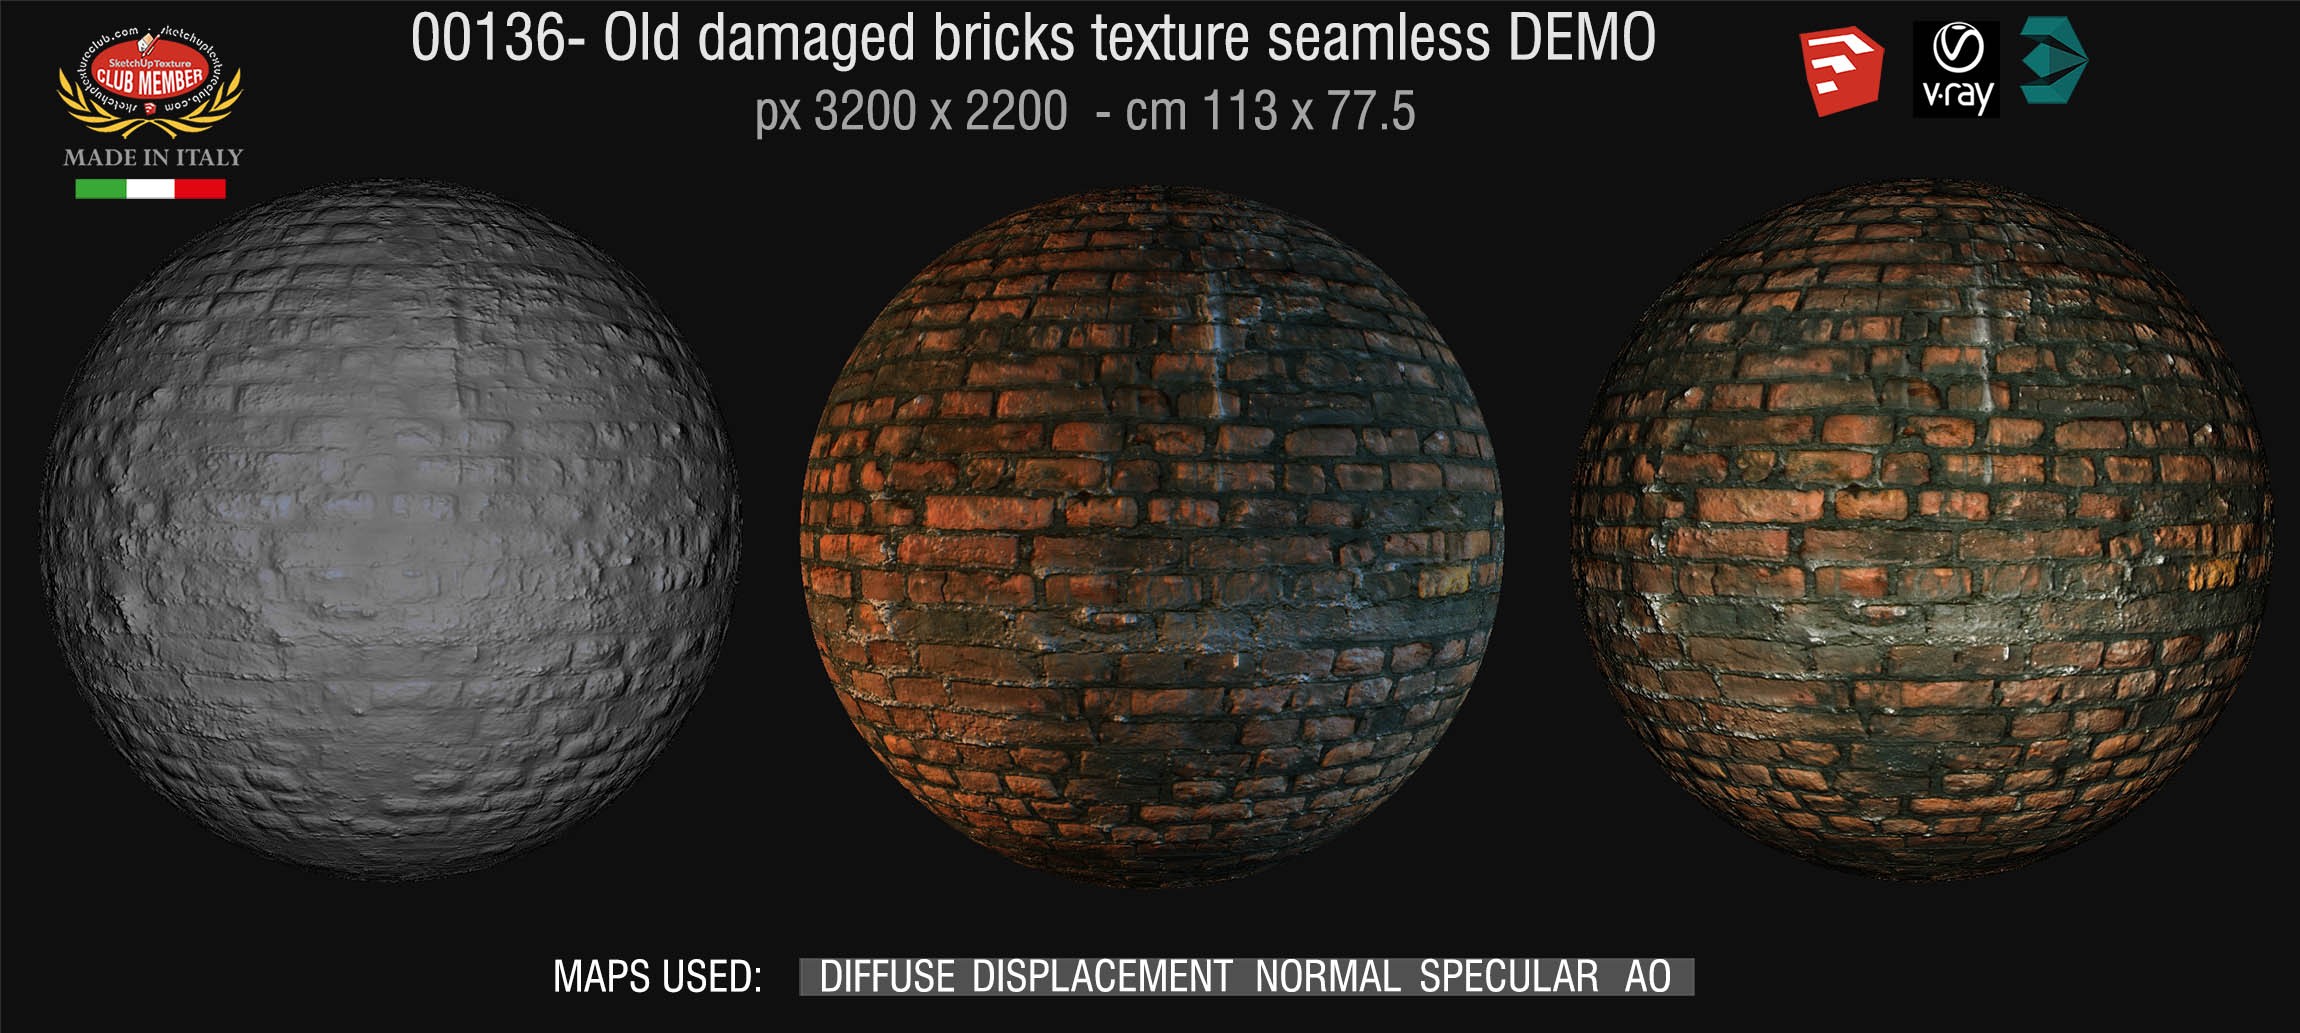 00136 HR Damaged bricks texture seamless + maps DEMO